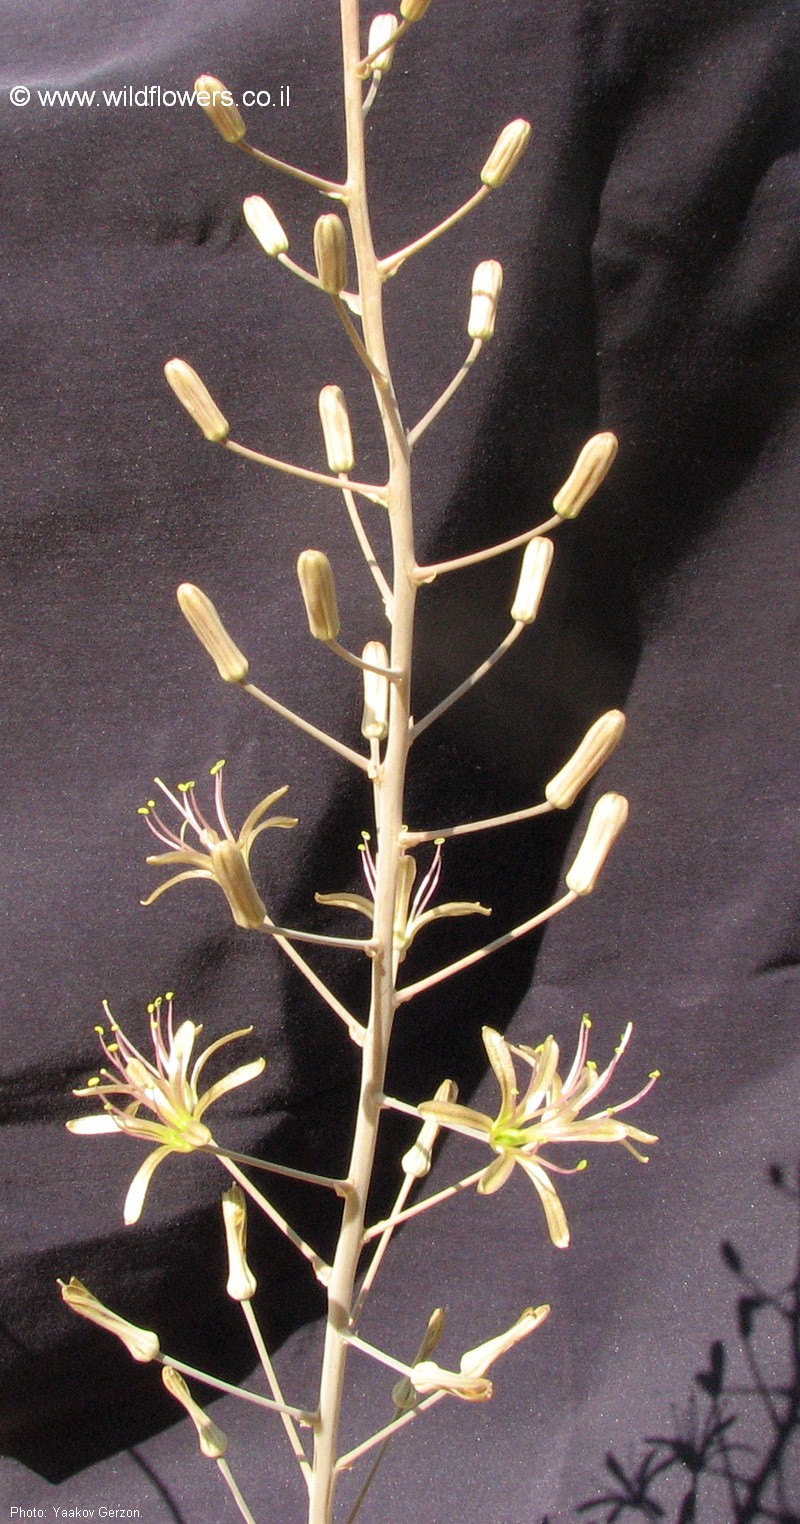 Drimia undulata